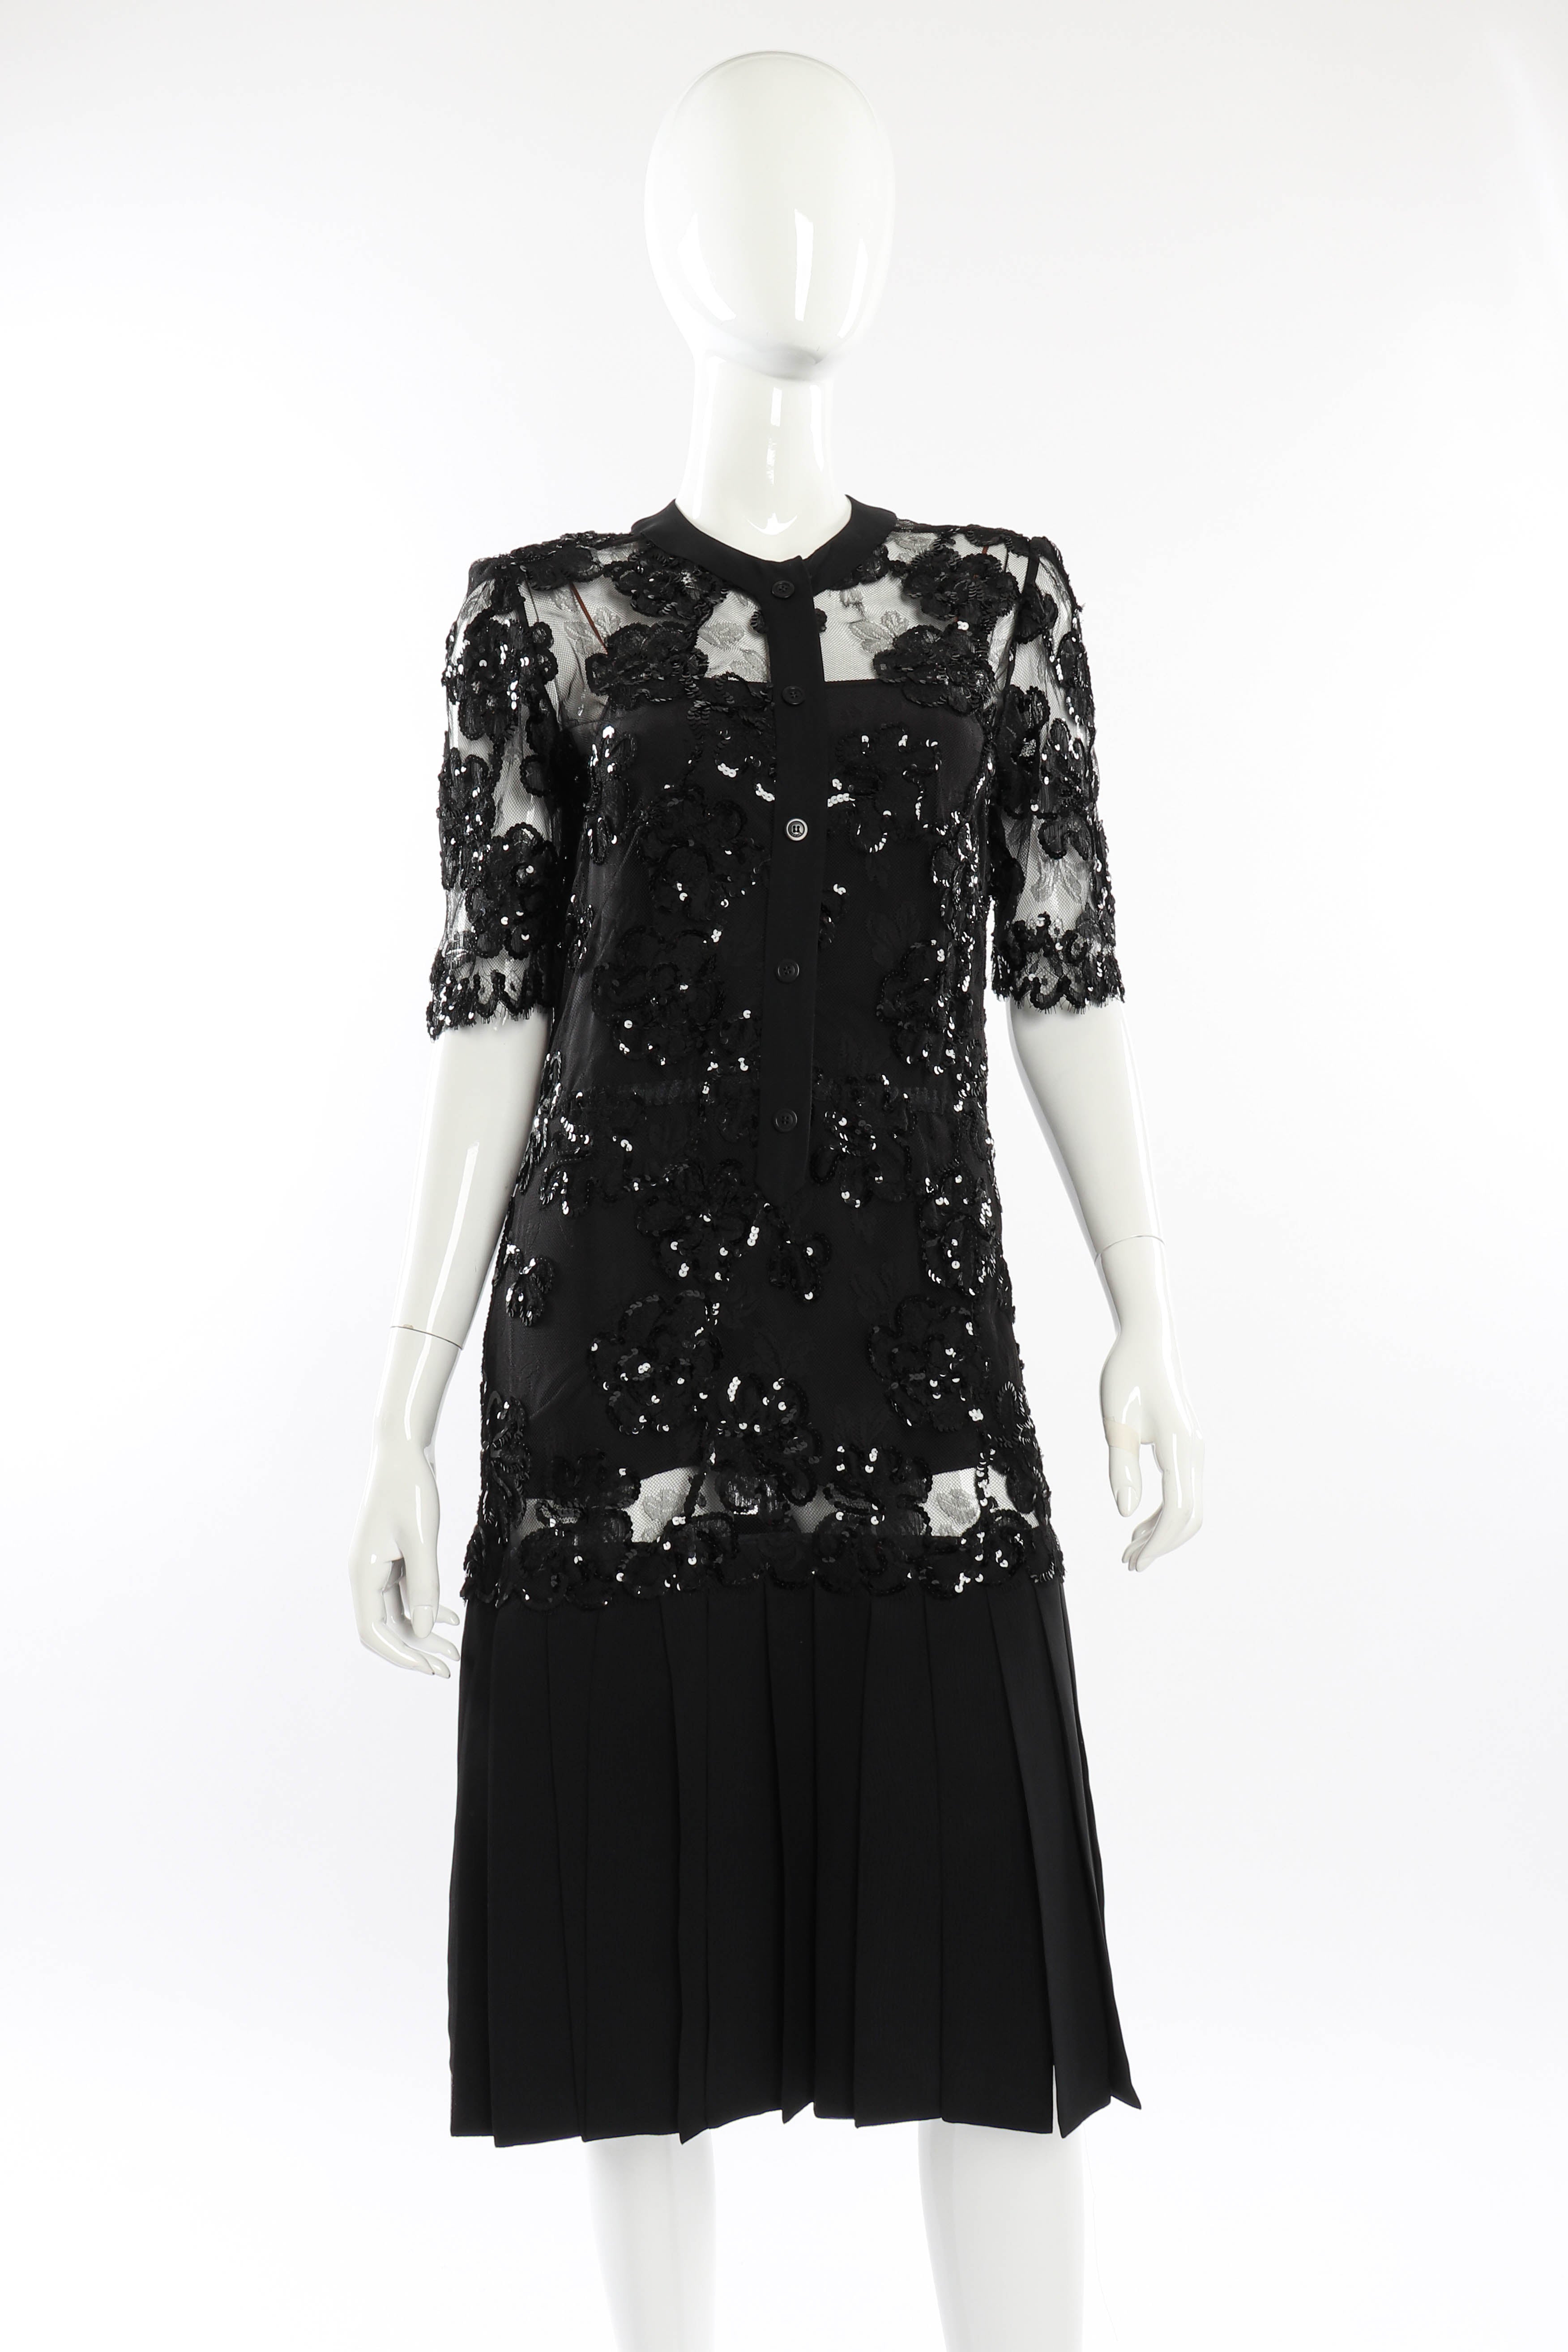 Vintage Adolfo Sequin Lace Dress front on mannequin @recessla